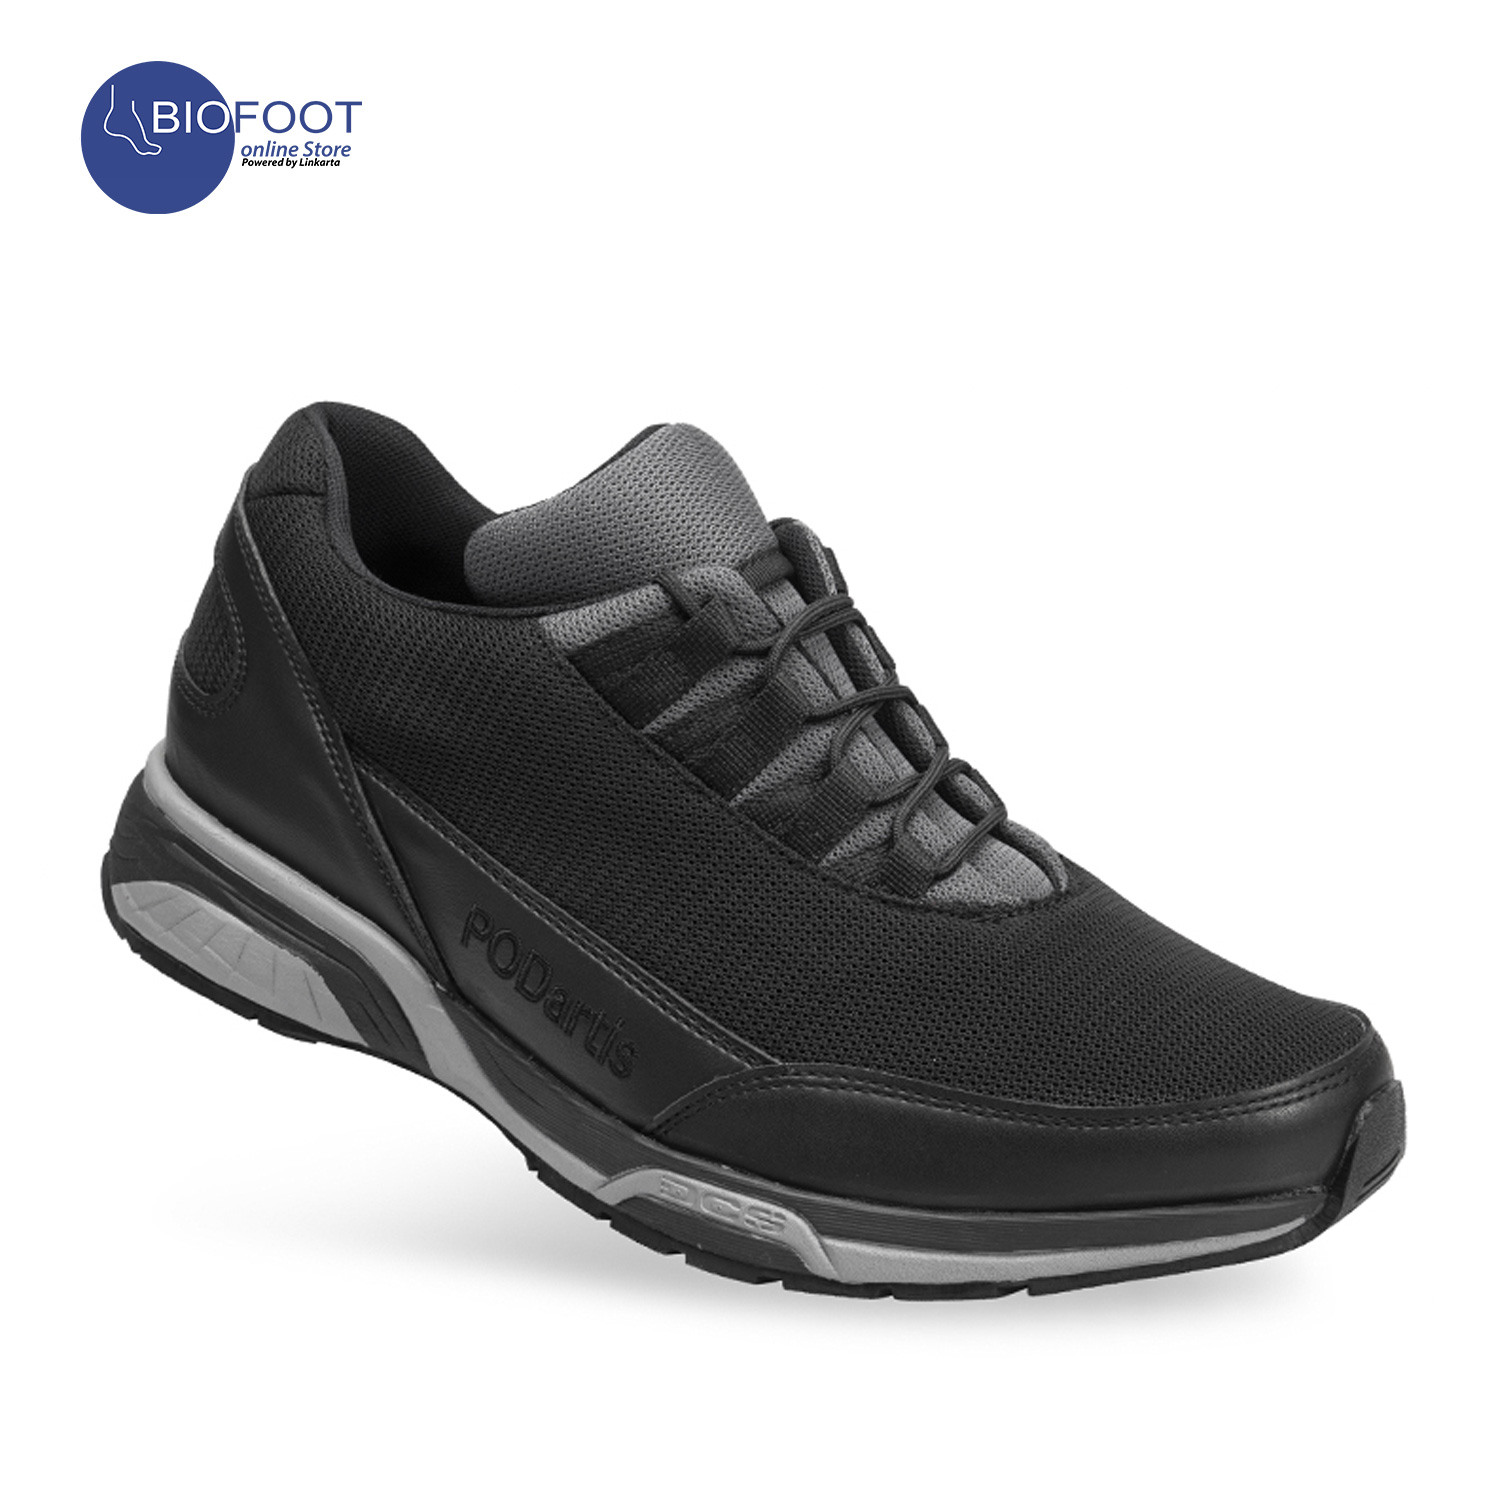 Podartis Activity DCS Sport Shoes PA37781 Online Shopping Dubai, UAE ...